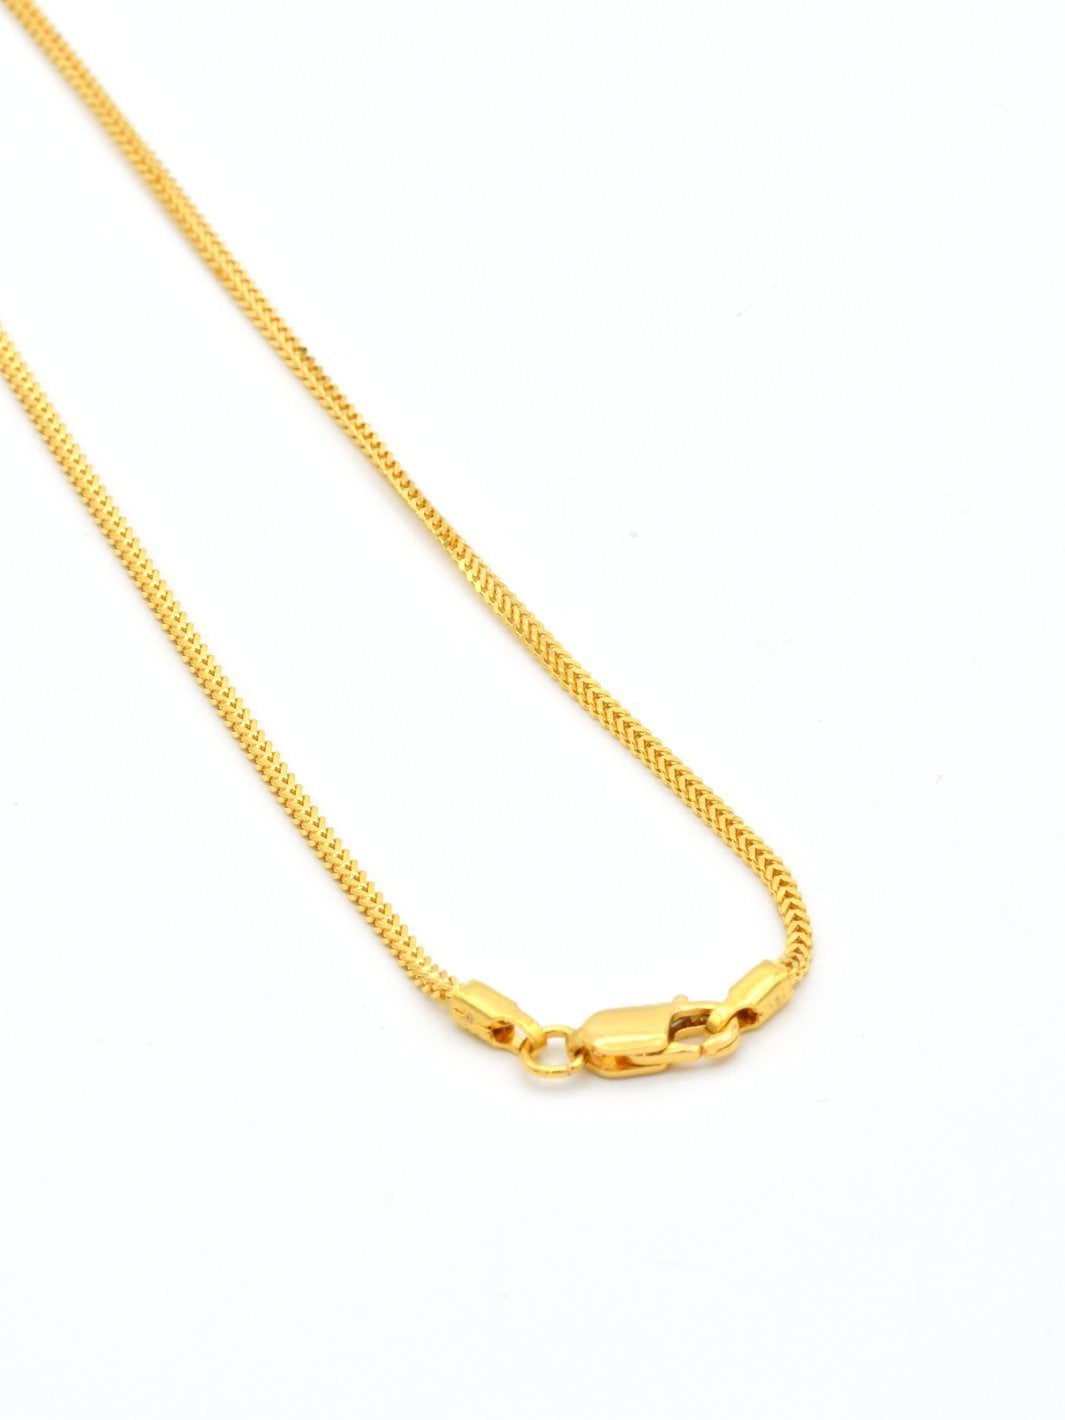 22ct Gold Fox Tail Chain - 65cm - Roop Darshan